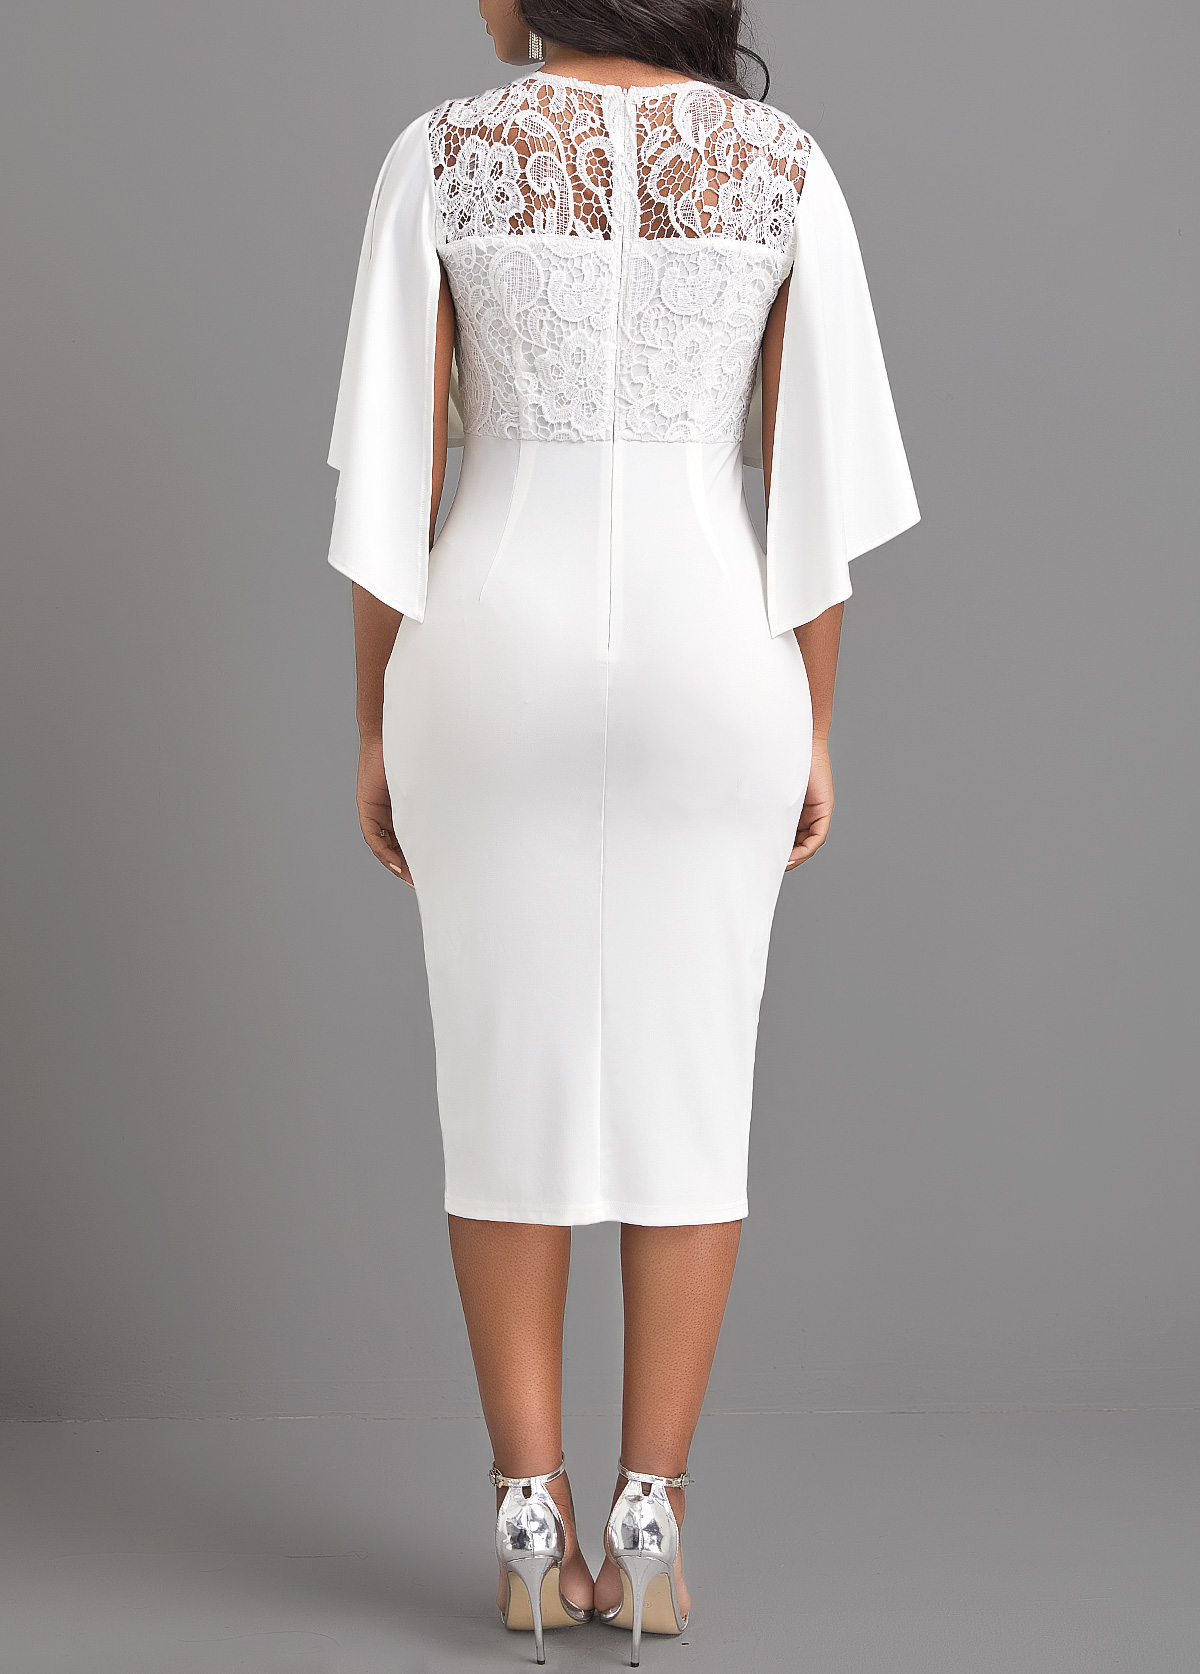 White Lace Half Sleeve Bodycon Dress